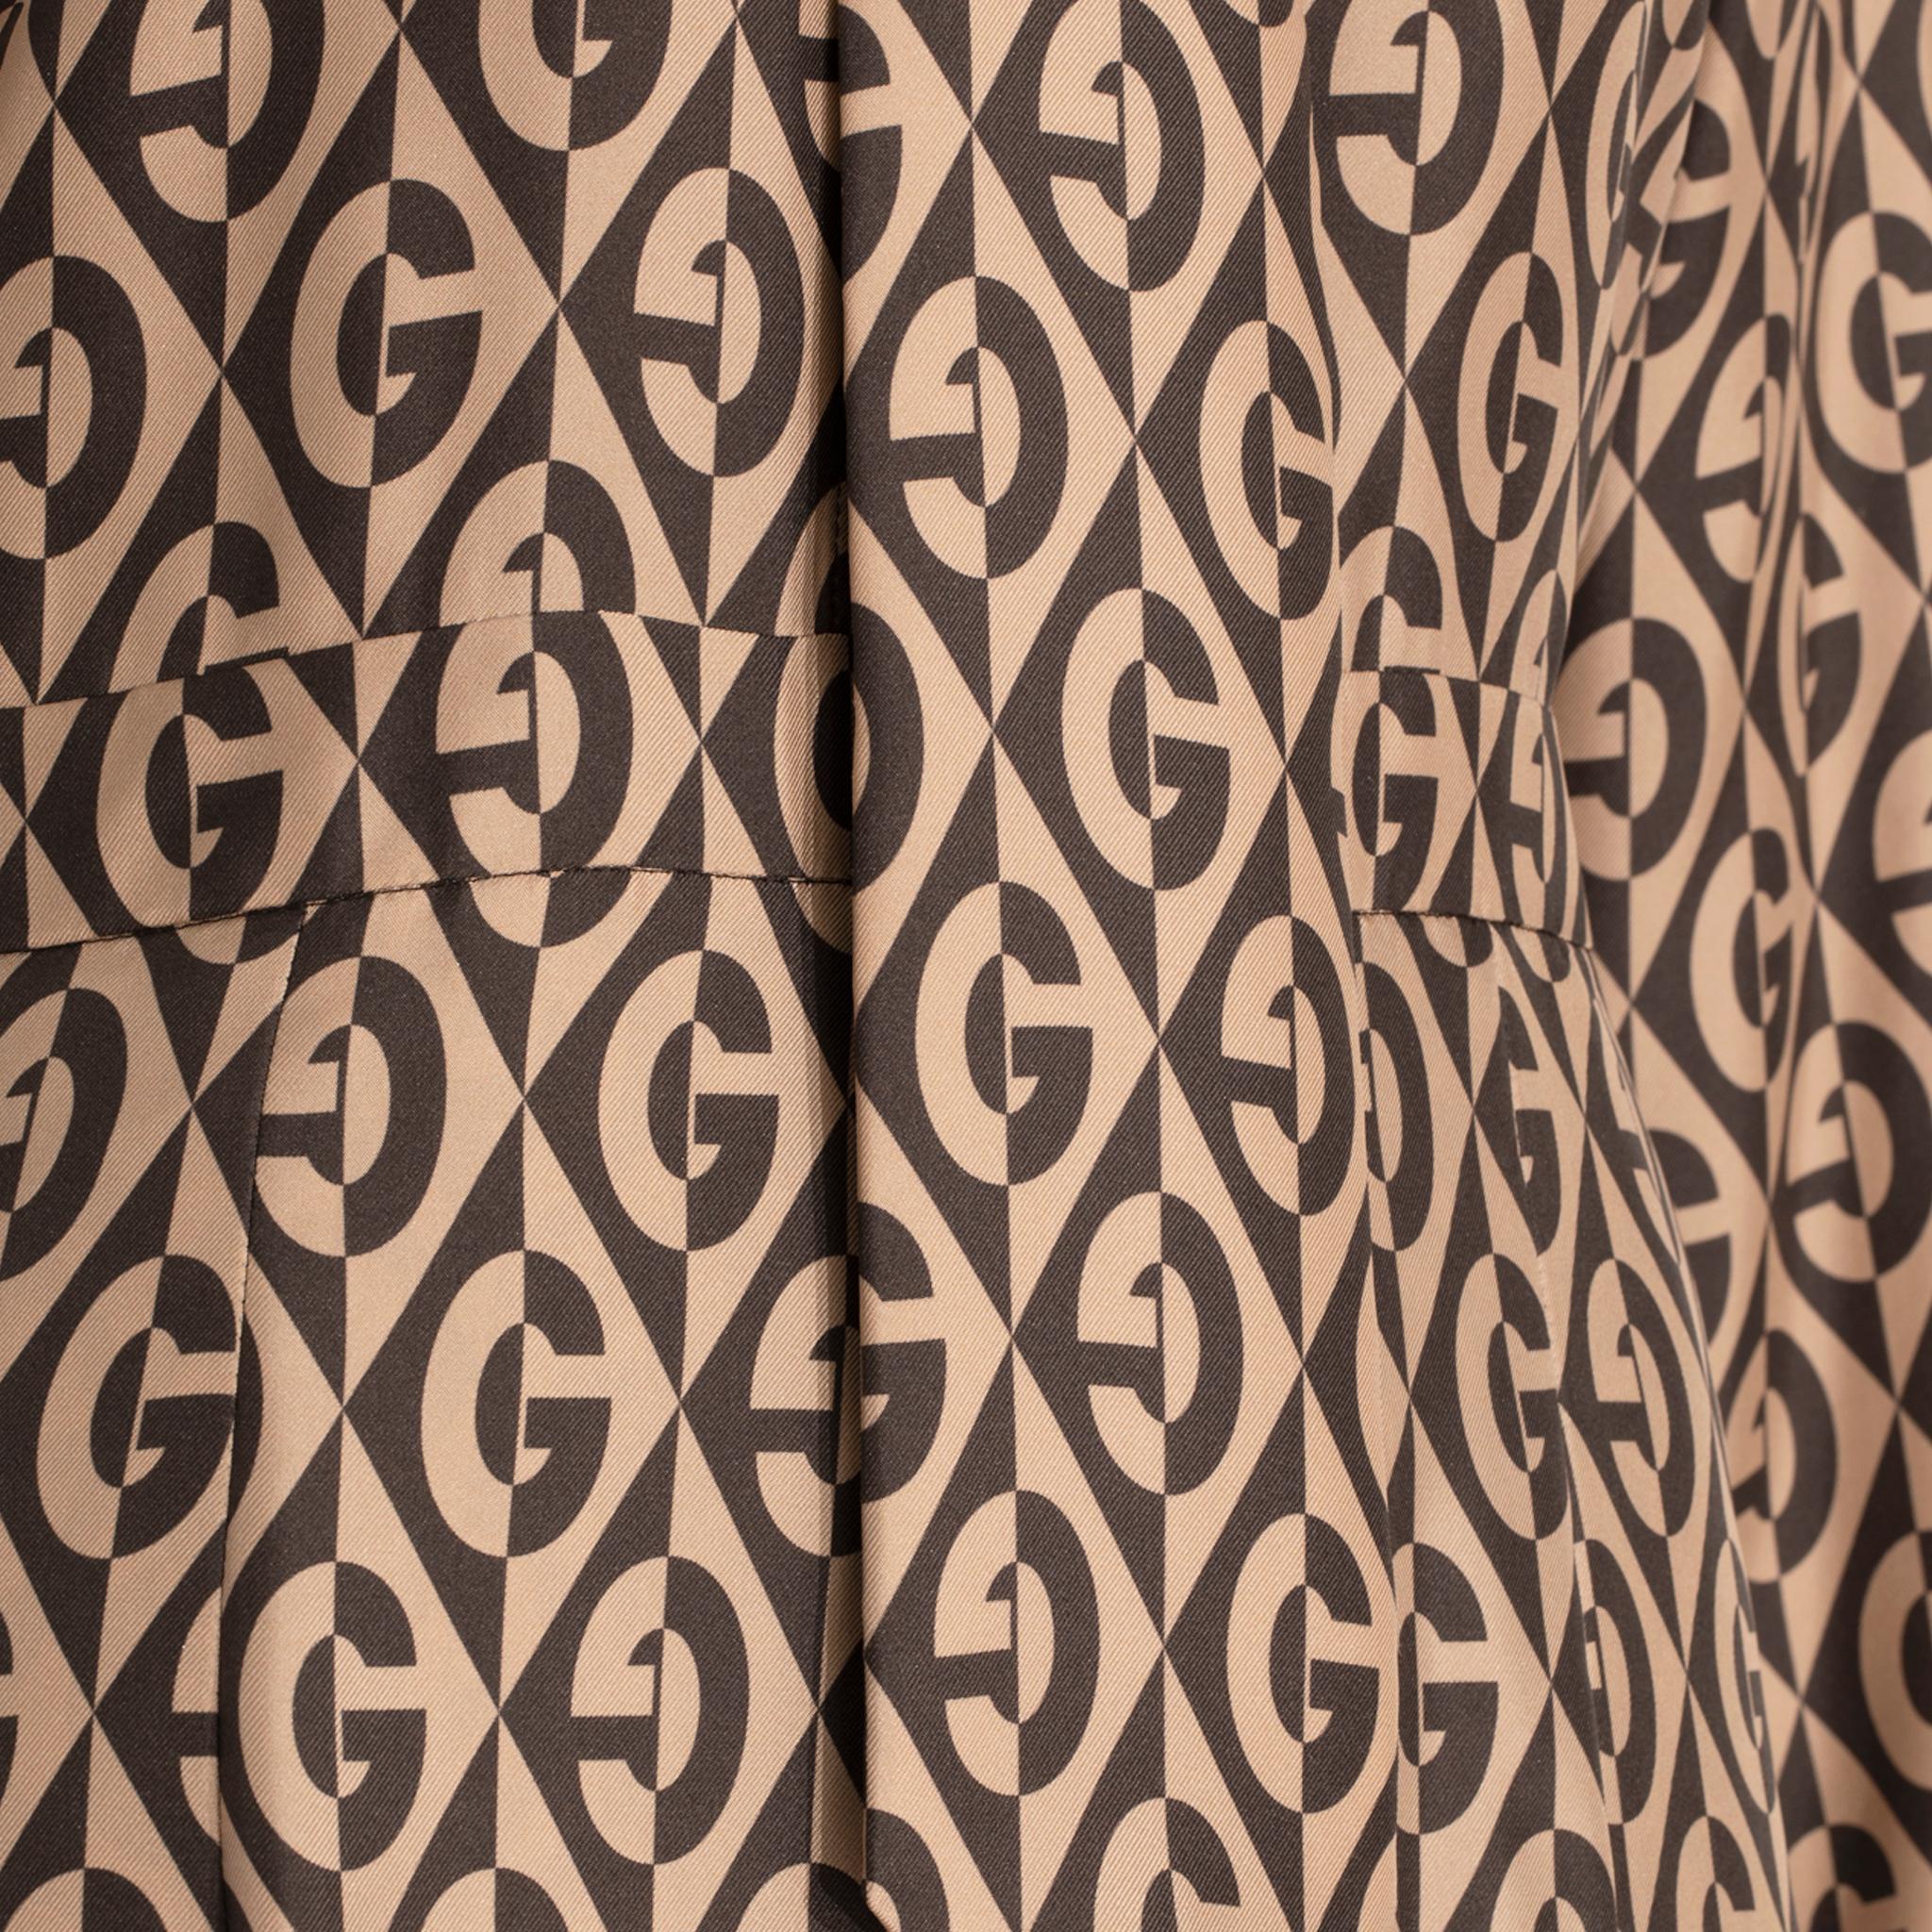 Gucci G Rhombus Brown & Ivory Print Dress Silk 40 IT For Sale 3